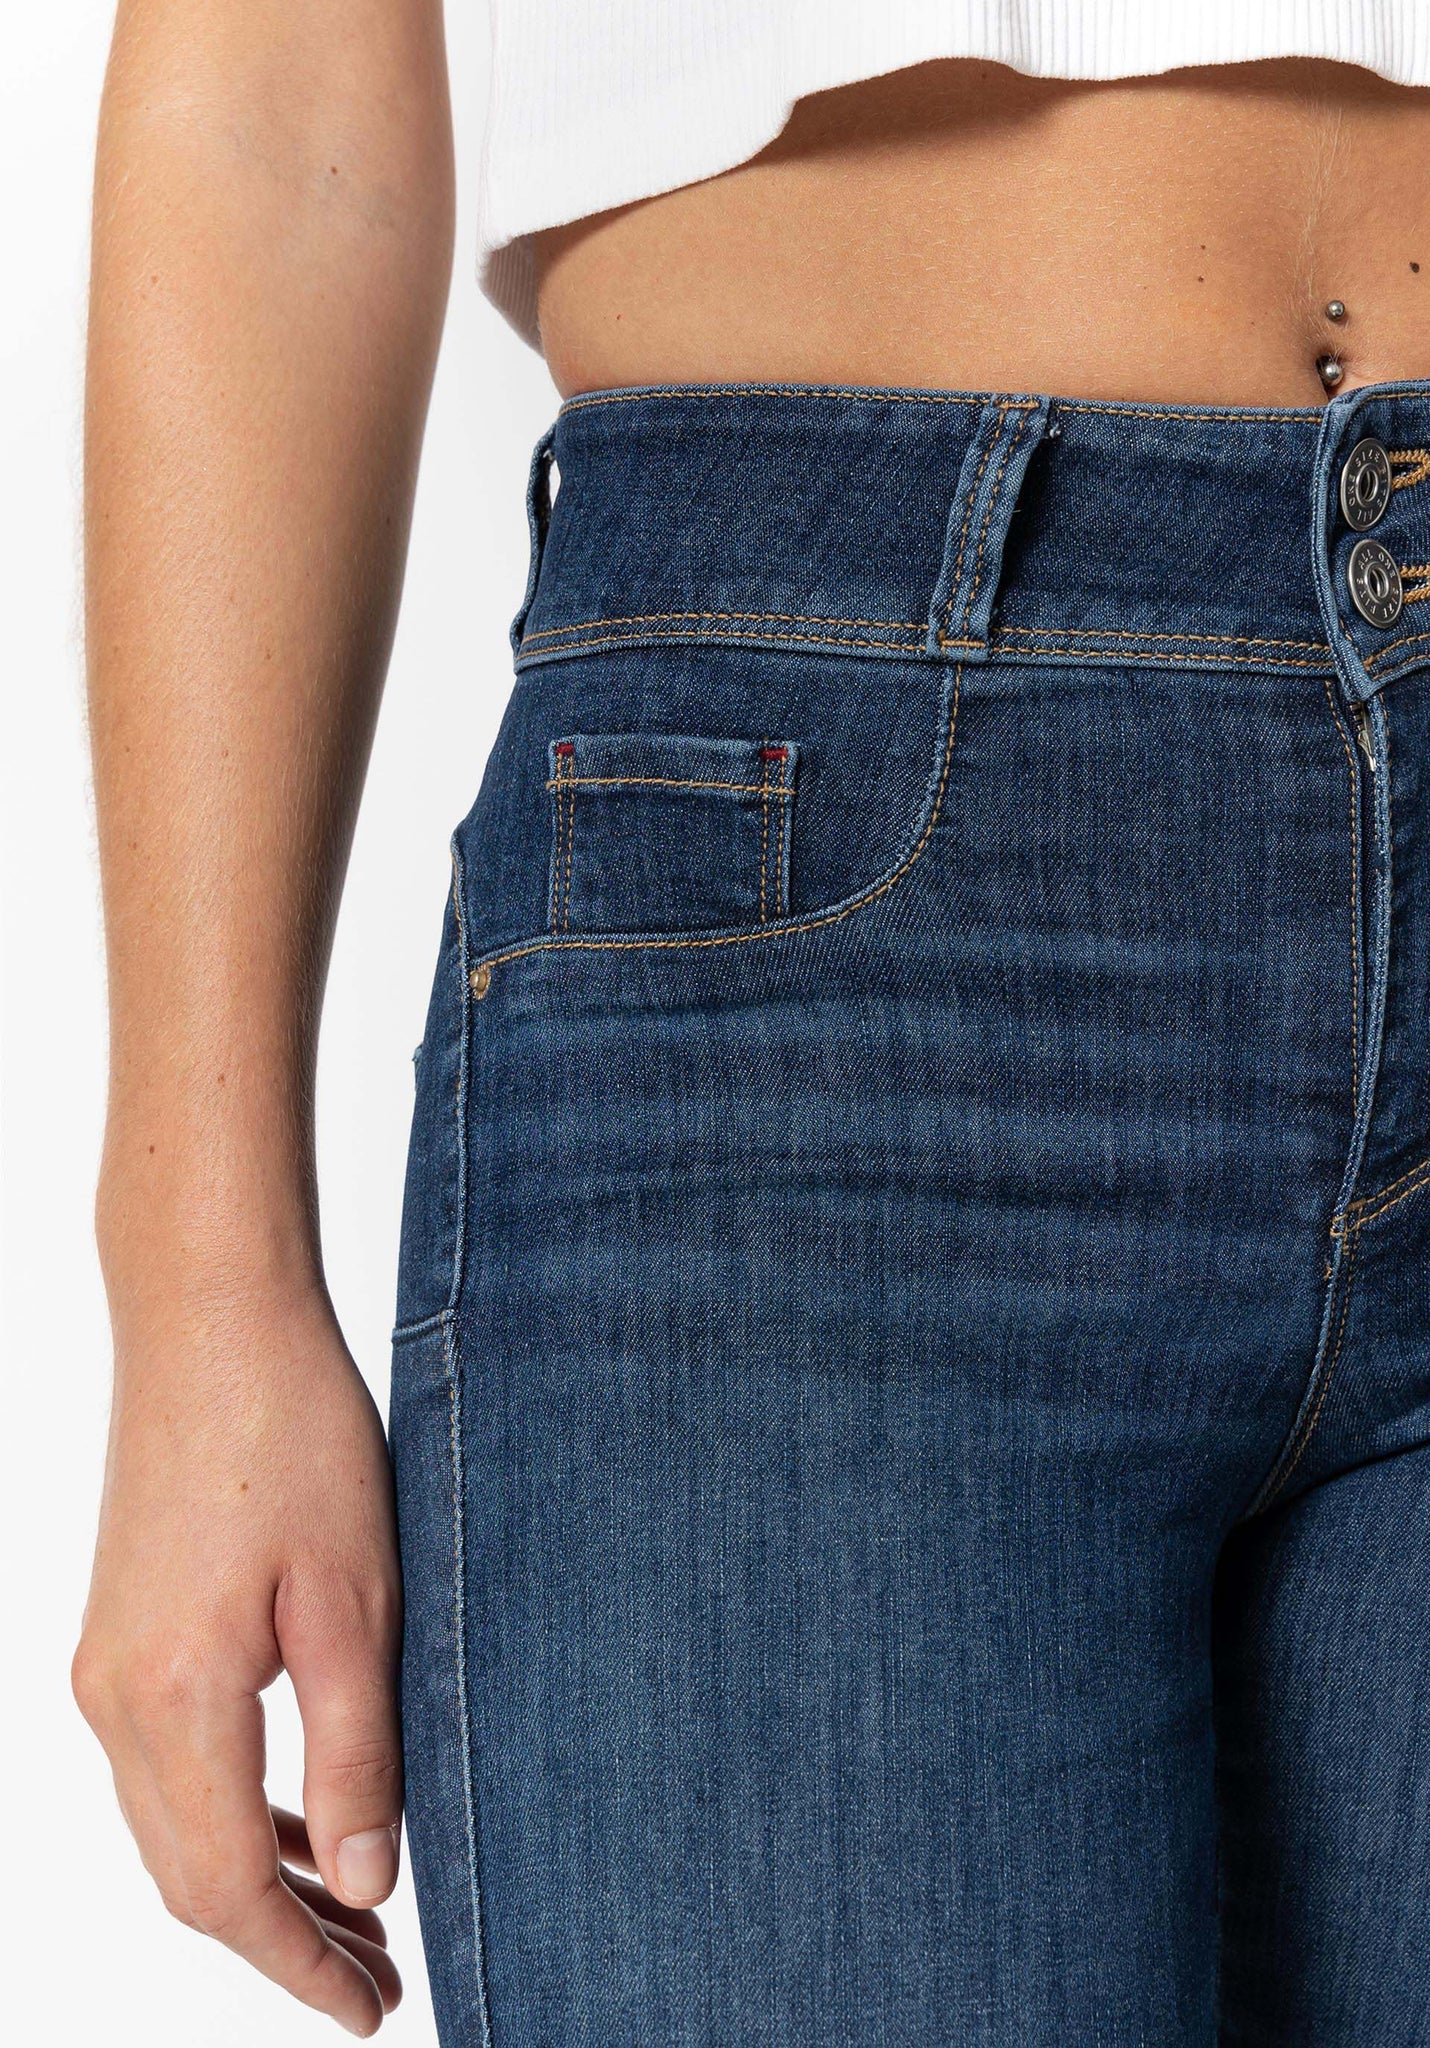 Tiffosi Silhouette Jeans One Size